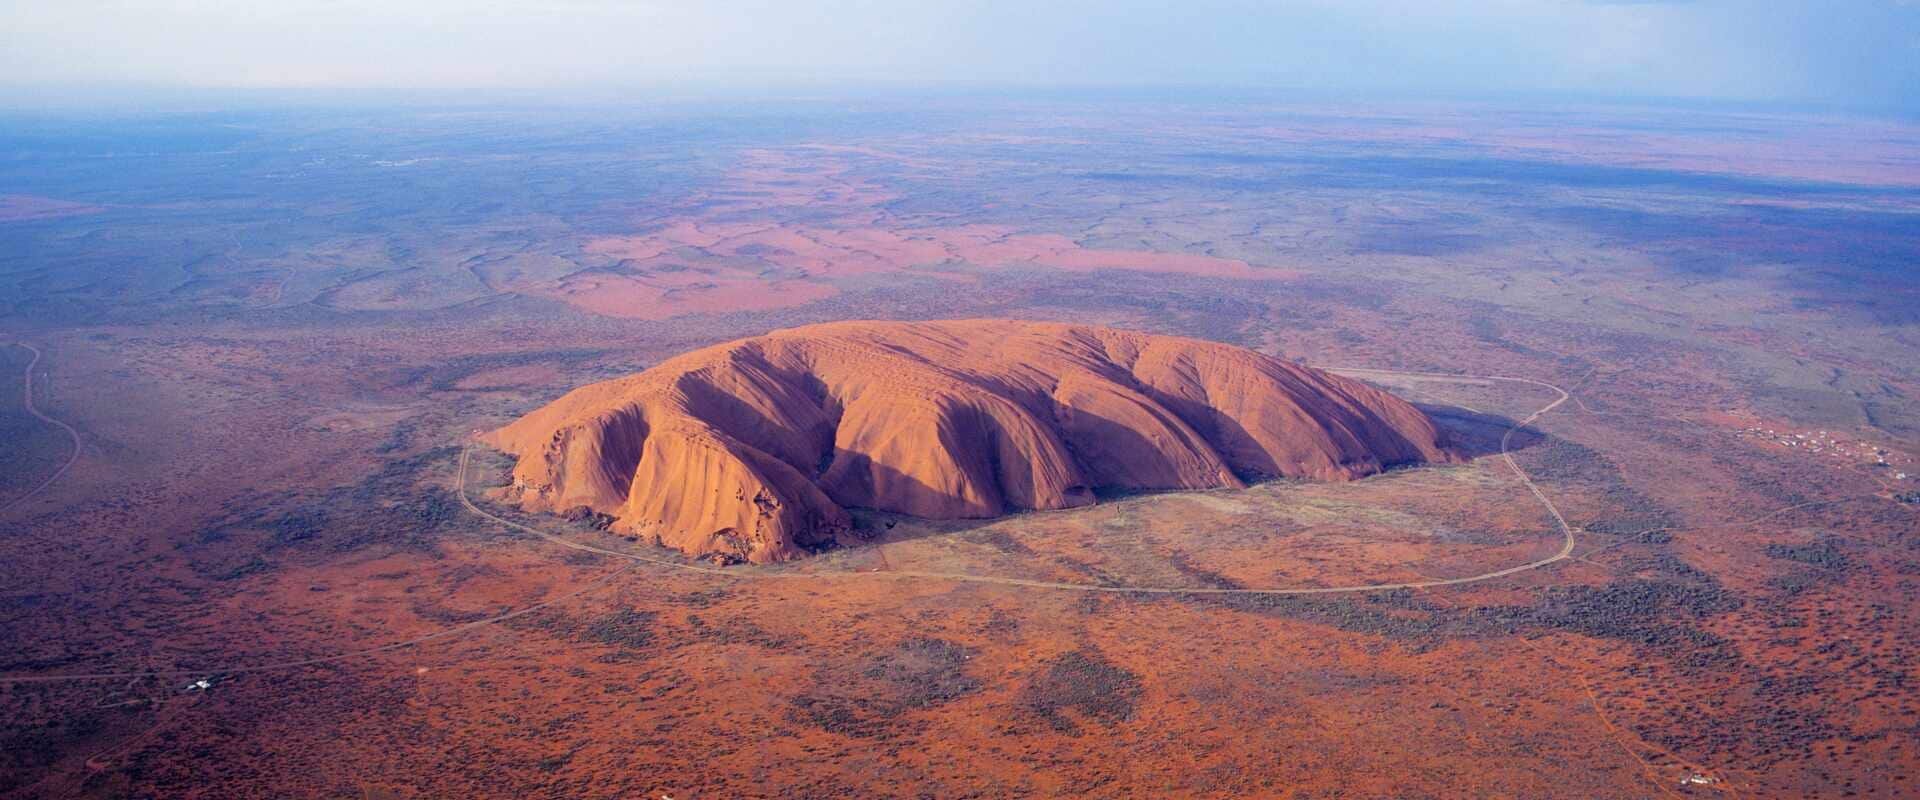 Uluru Aerial View, Northern Territory